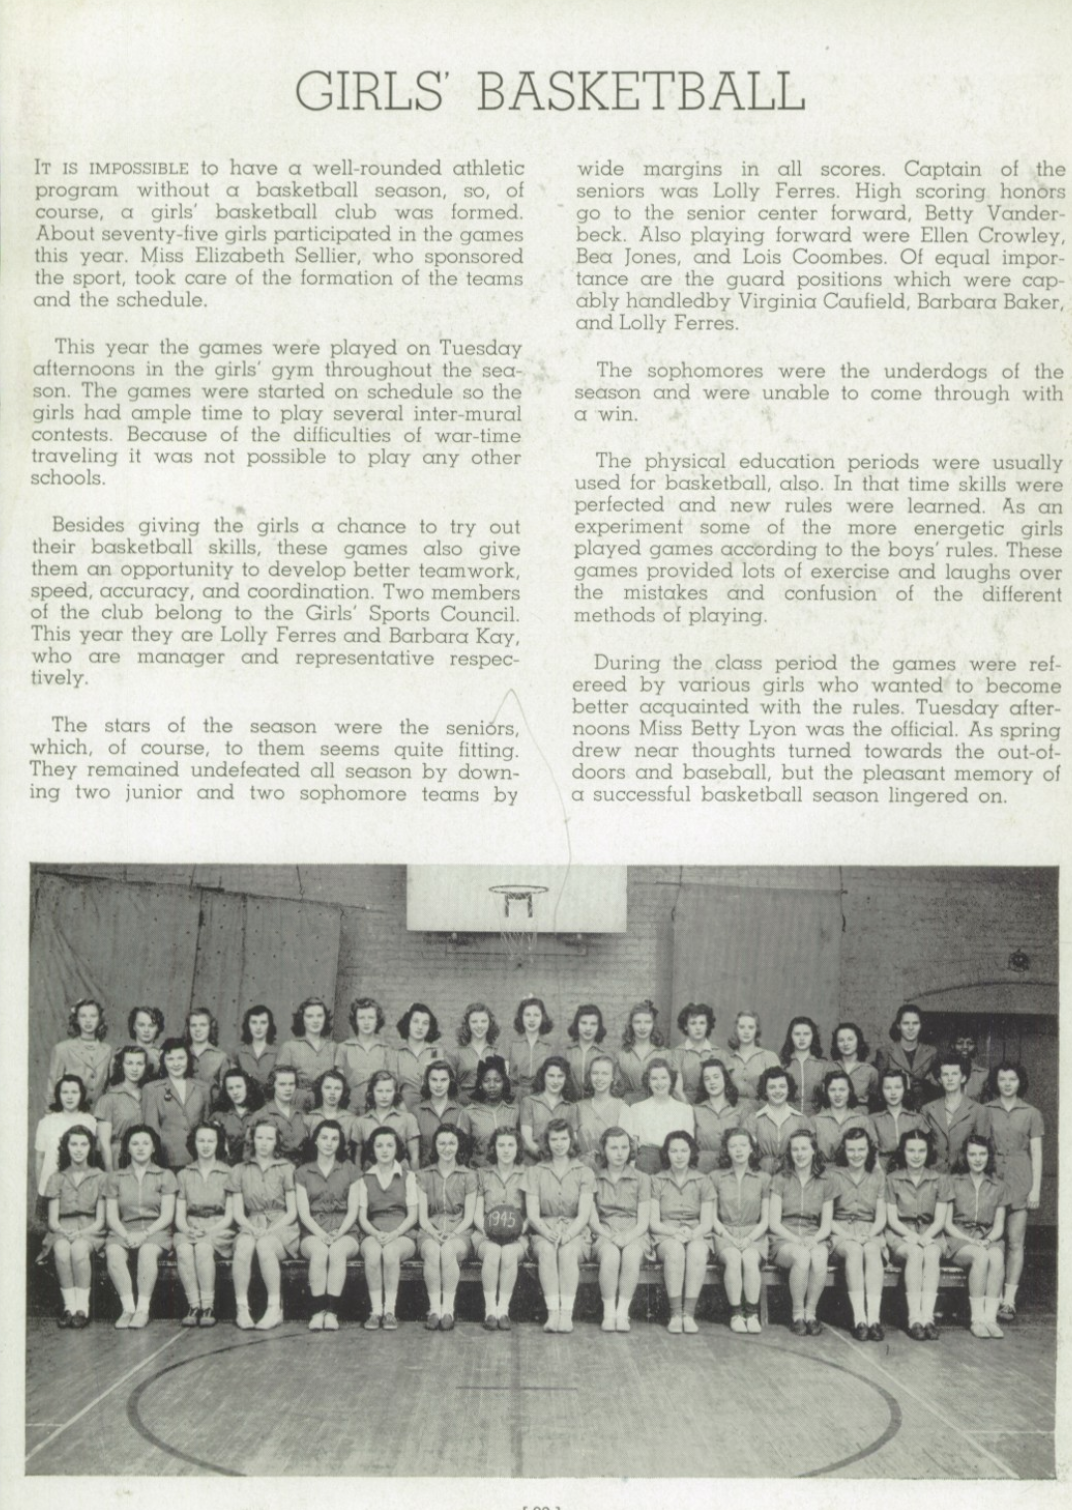 1945 Girls’ Basketball Team